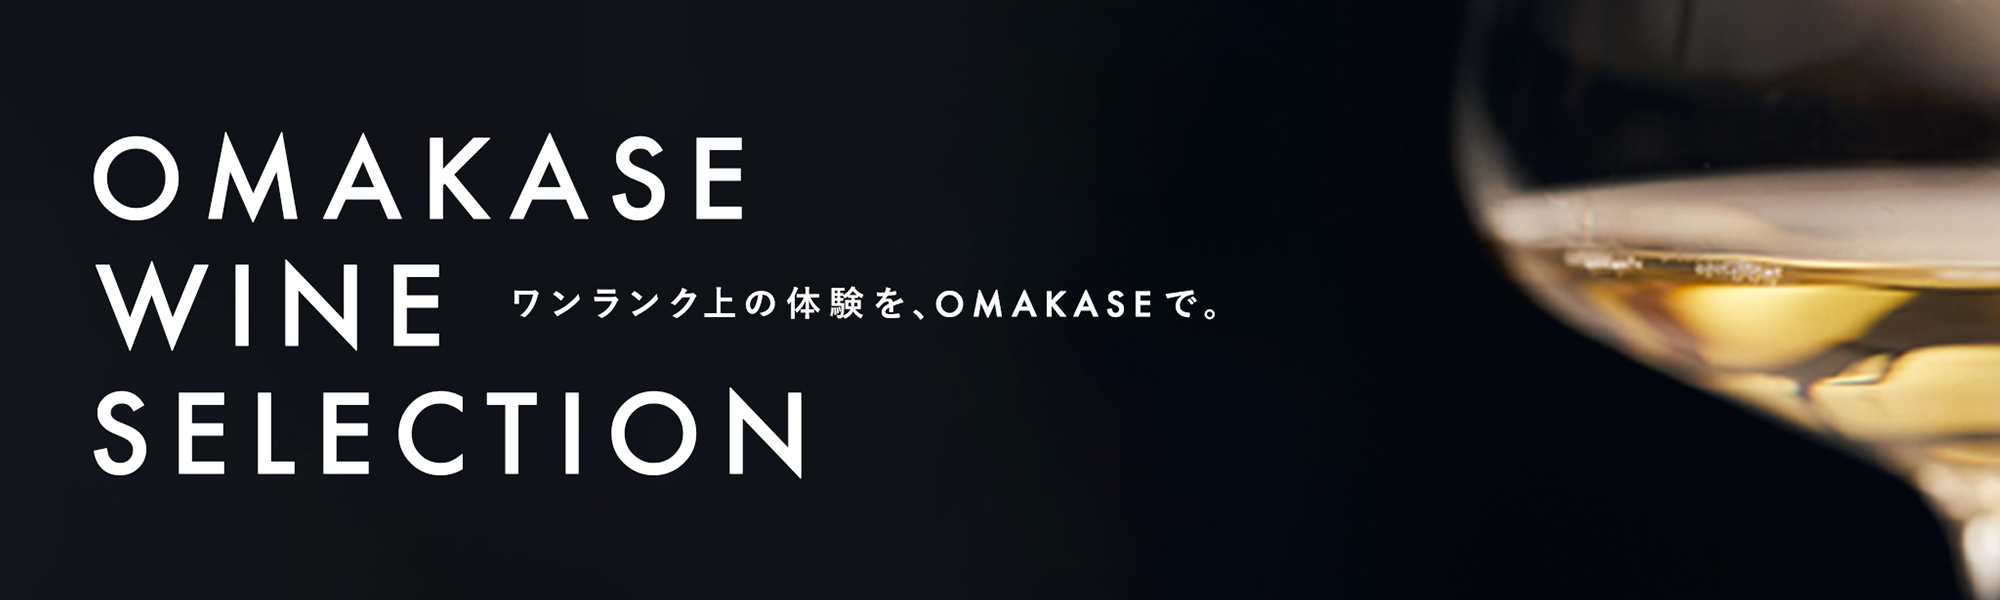 OMAKASE WINE SELECTION